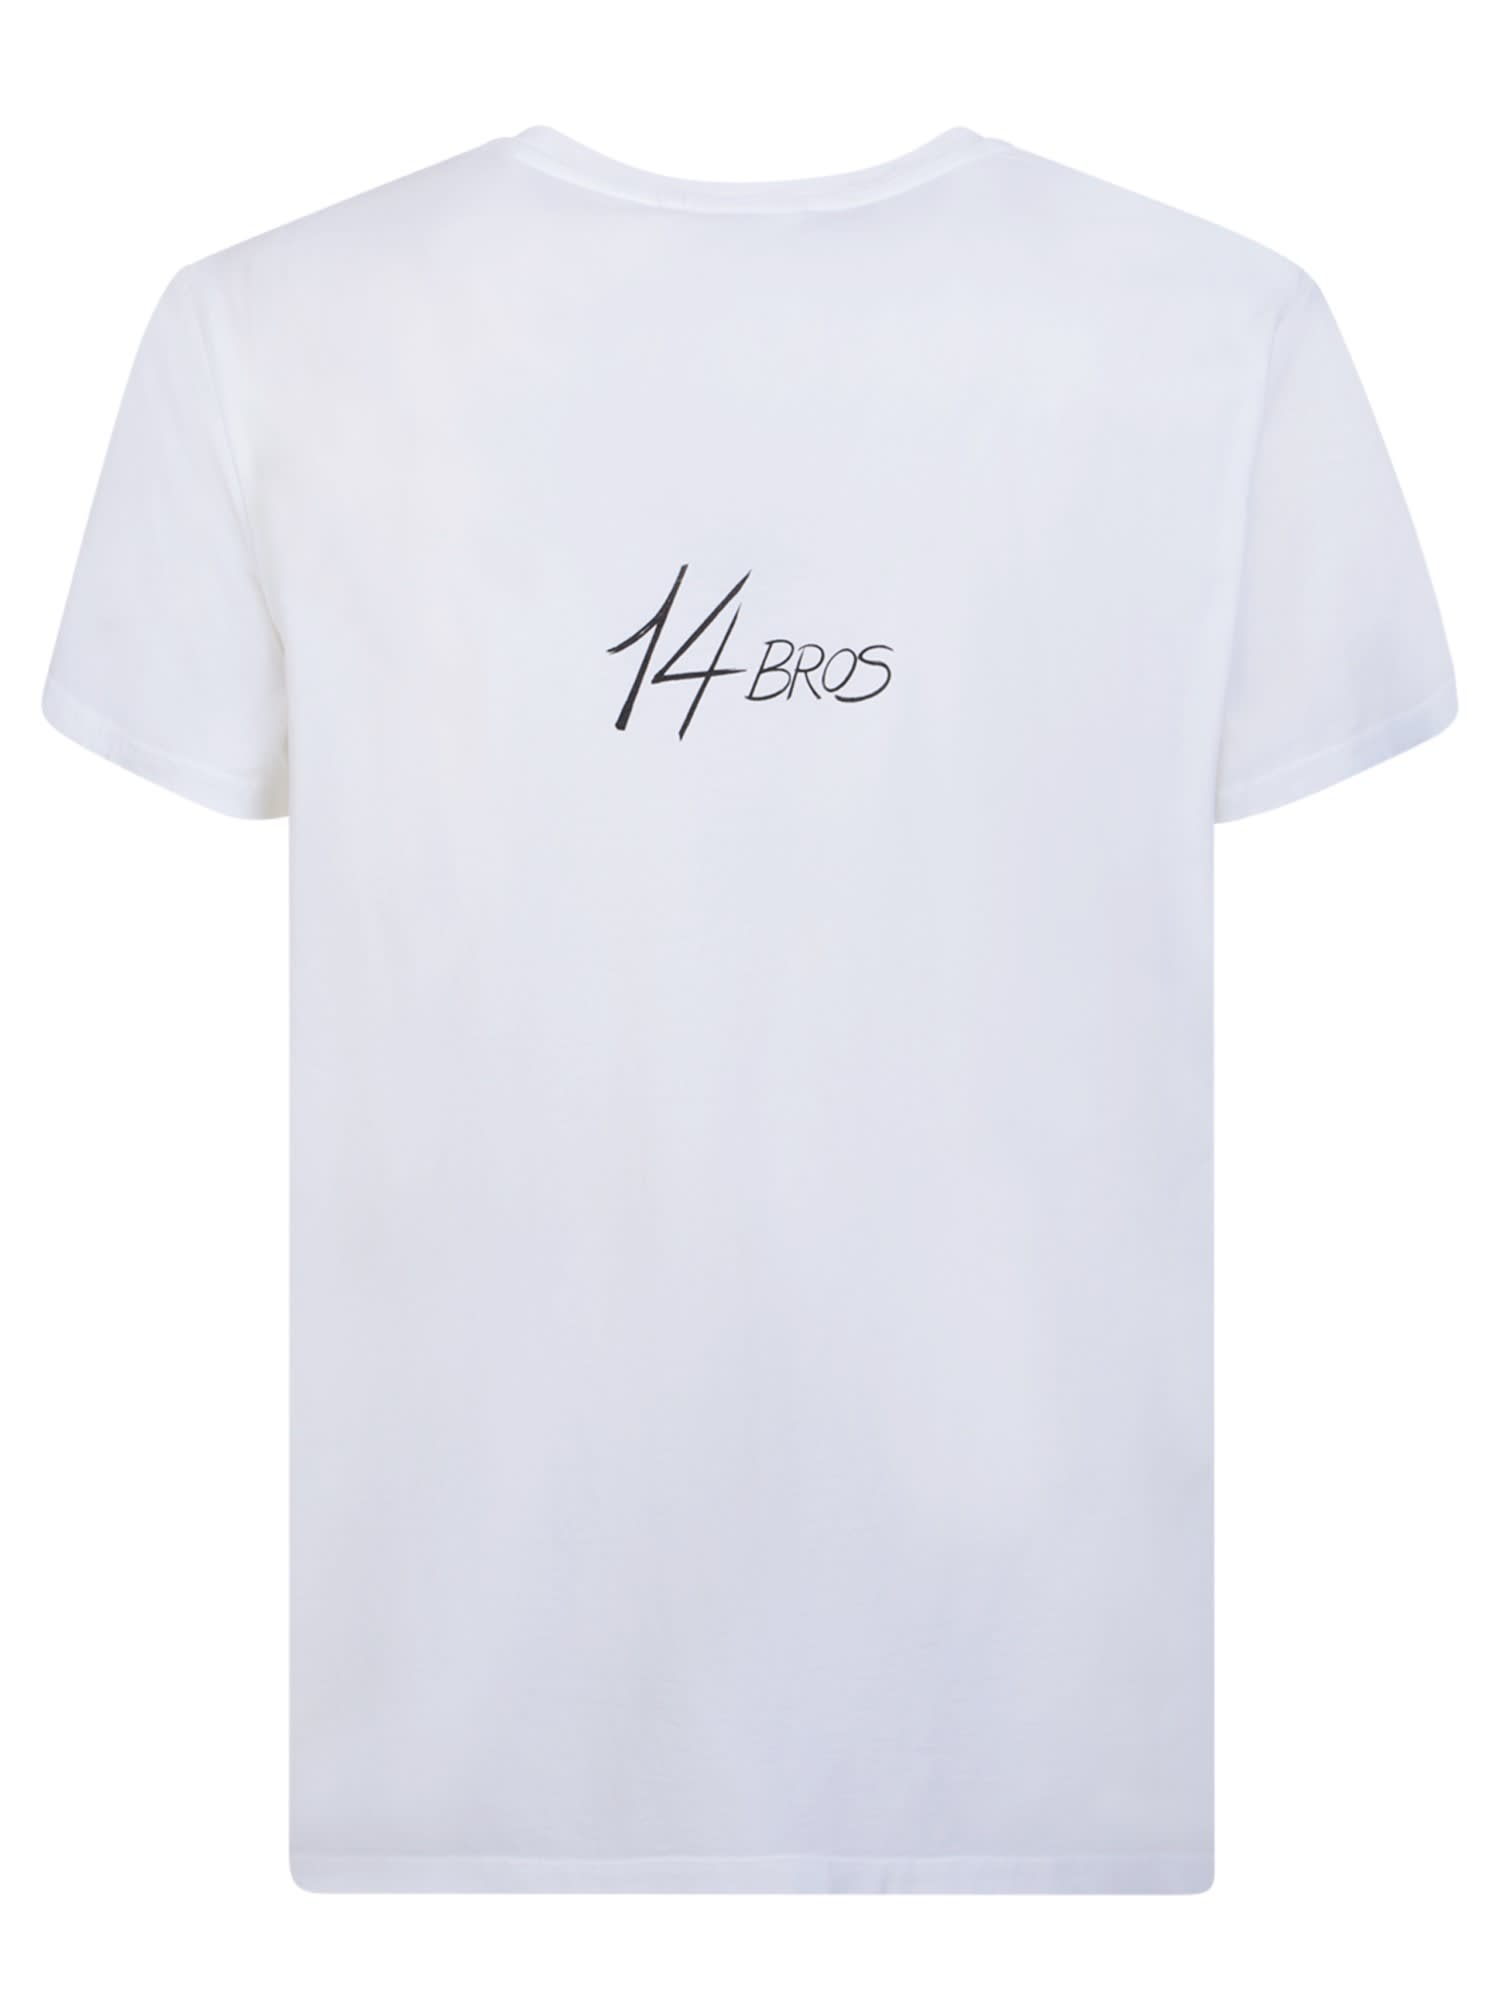 Shop 14 Bros Logo White T-shirt